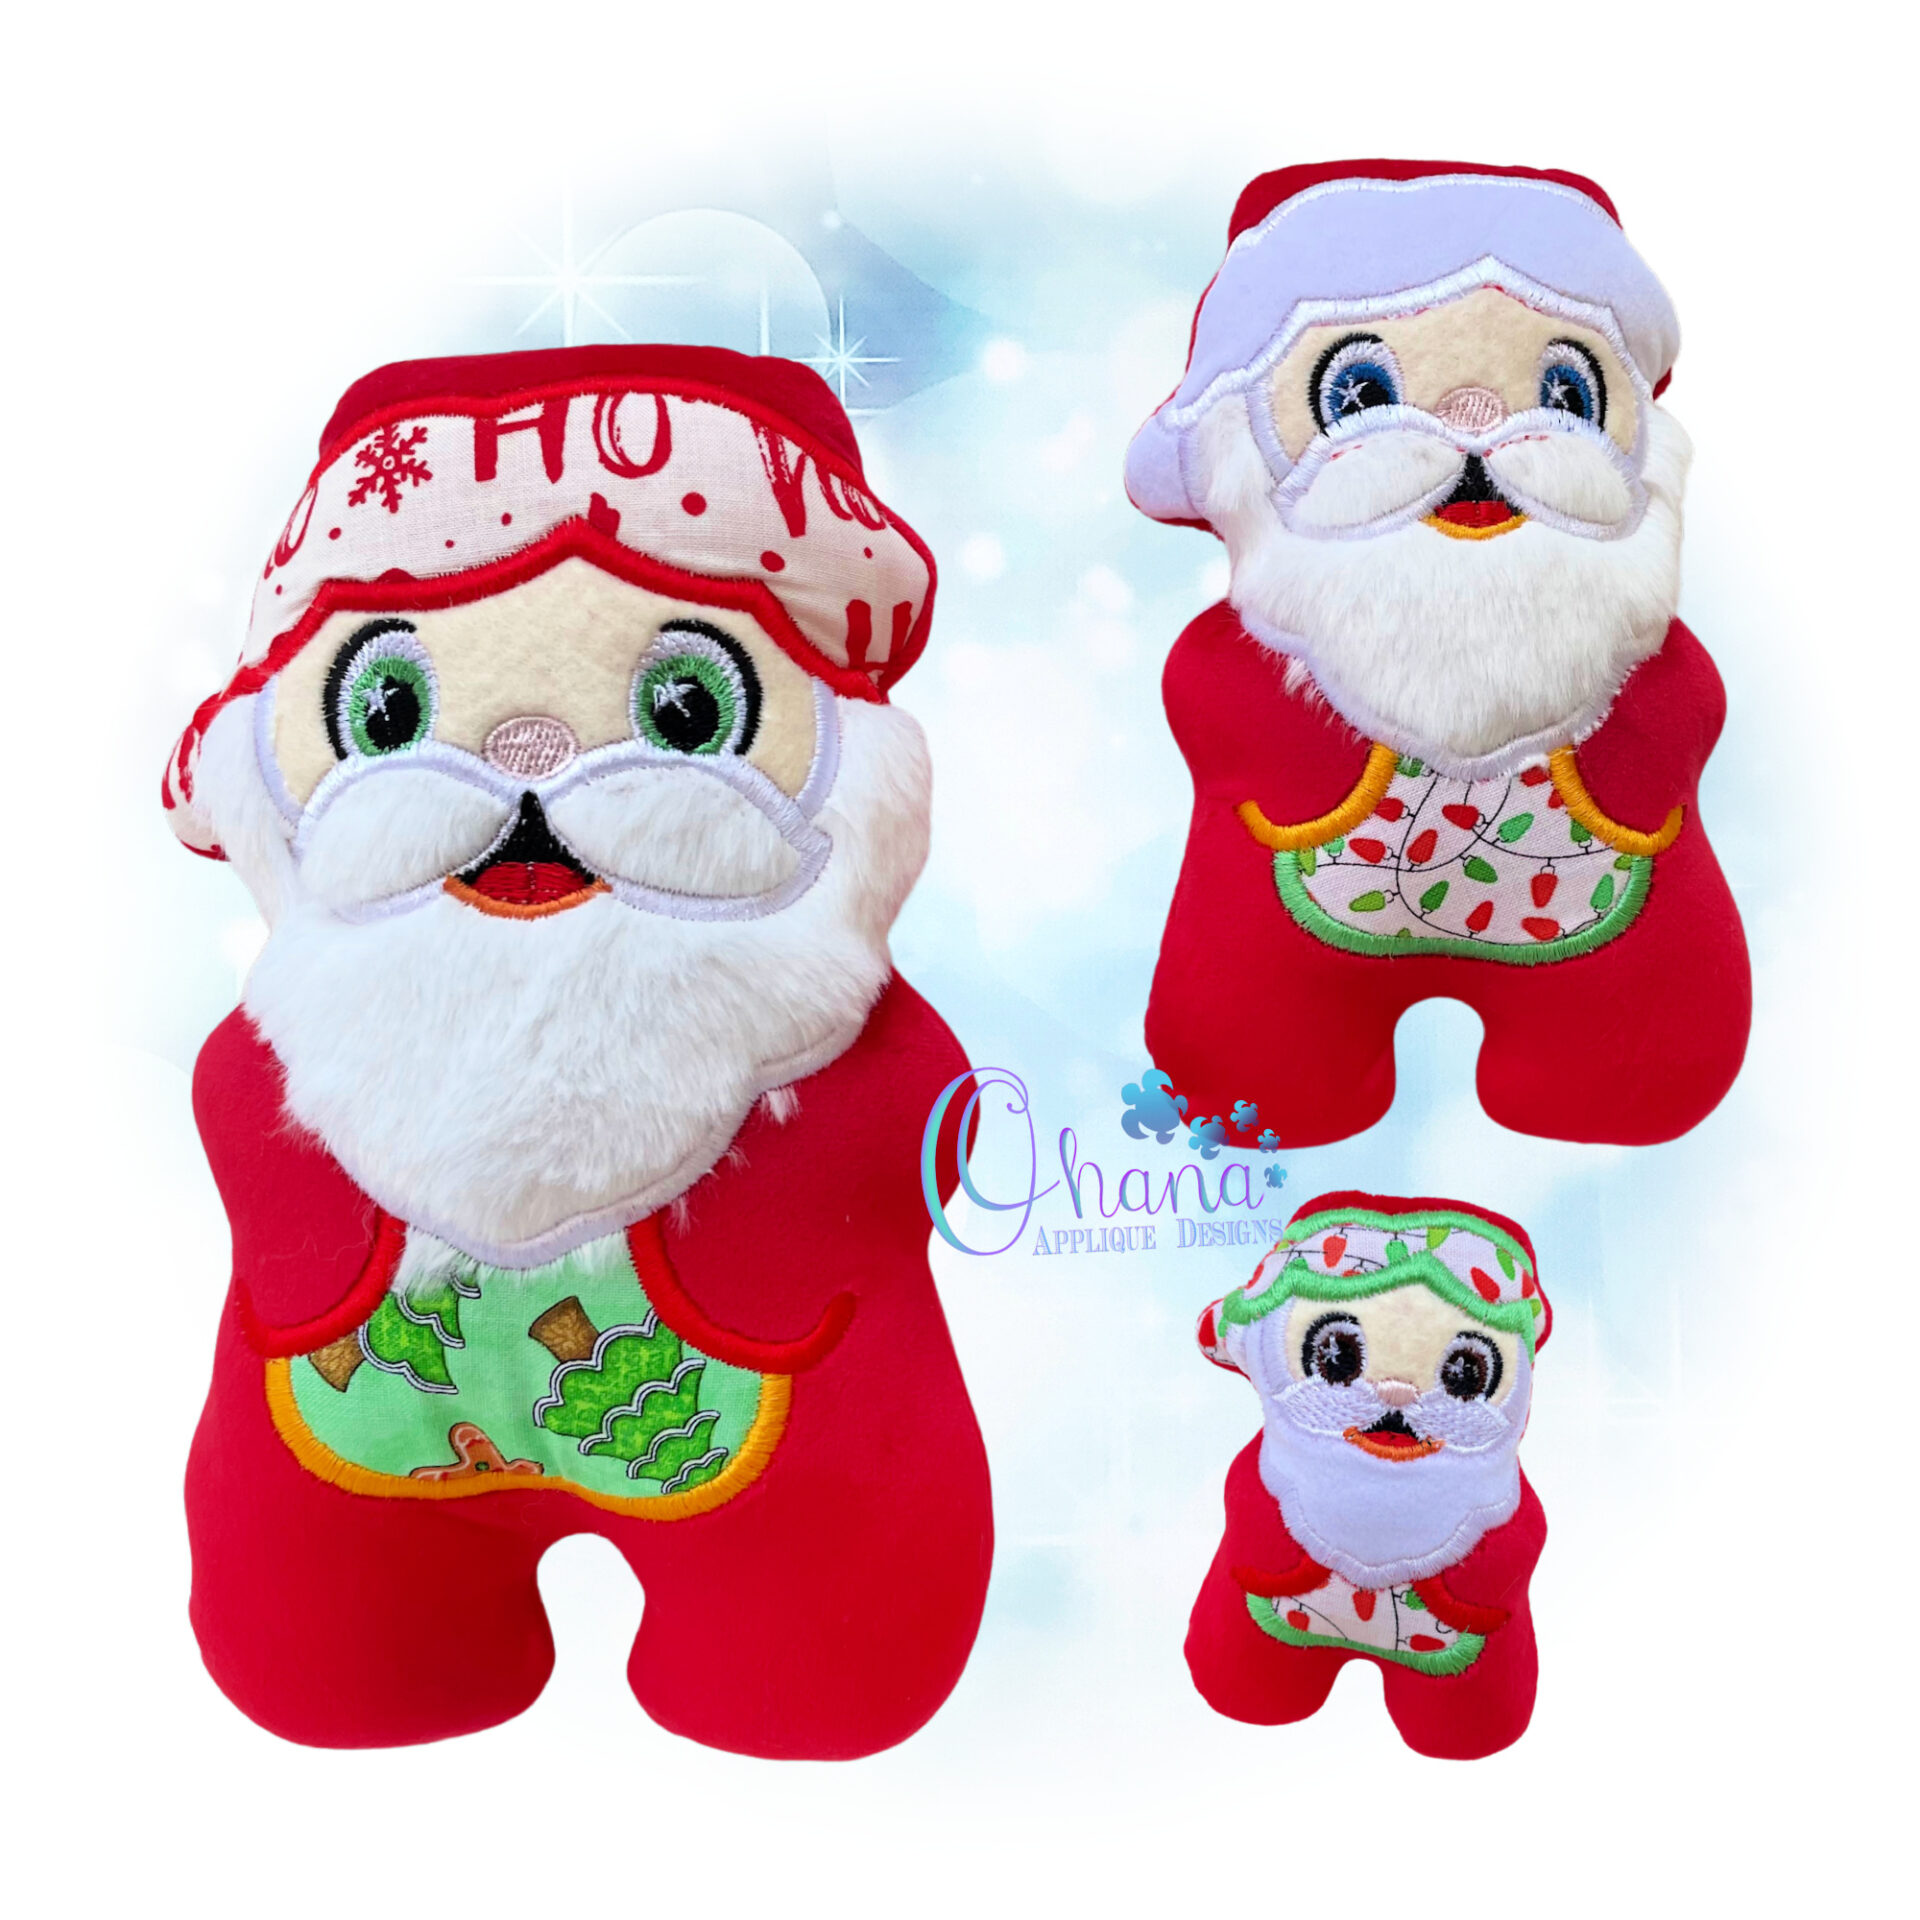 OAD Chubby Santa Claus Stuffie 2000 copy 2